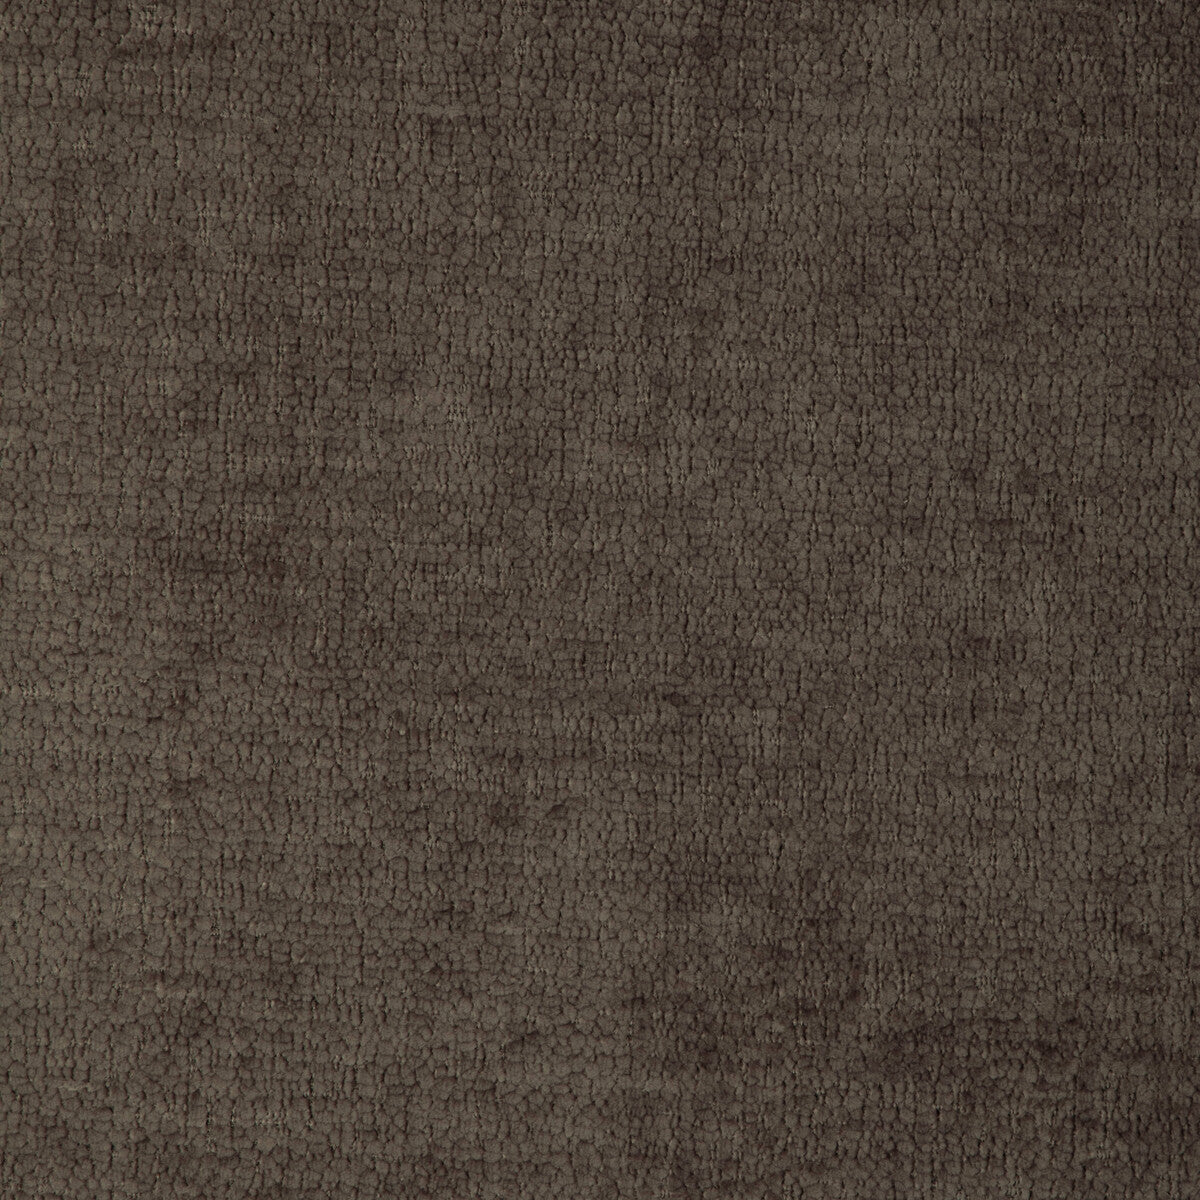 Kravet Smart fabric in 36997-21 color - pattern 36997.21.0 - by Kravet Smart